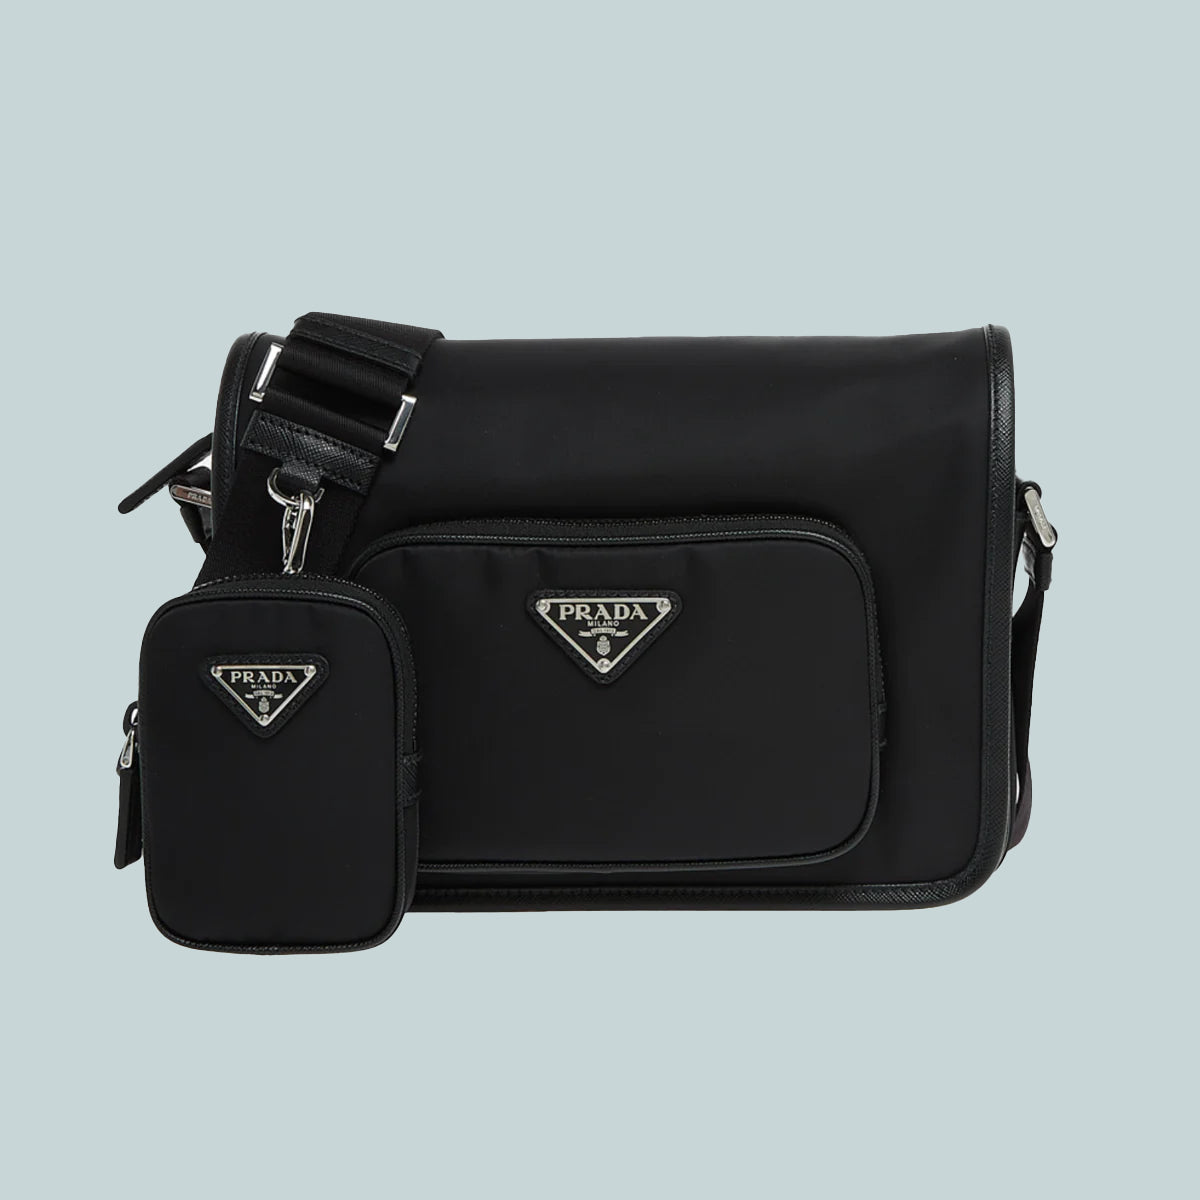 Re-Nylon and Leather Shoulder Bag